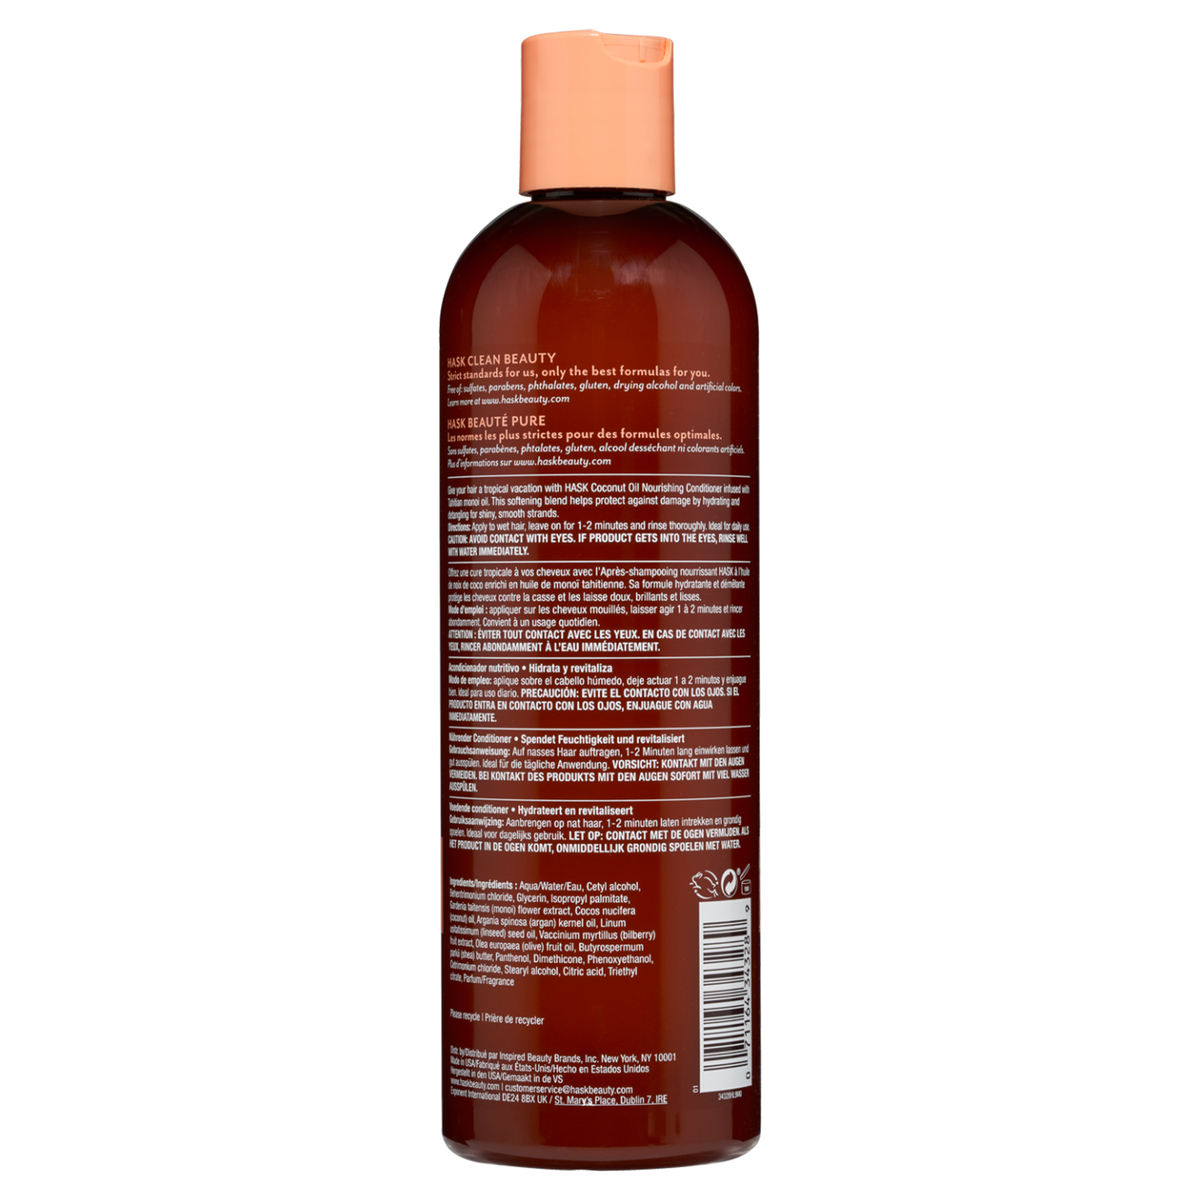 Hask Coconut Oil Nourishing Conditioner, 355 ml